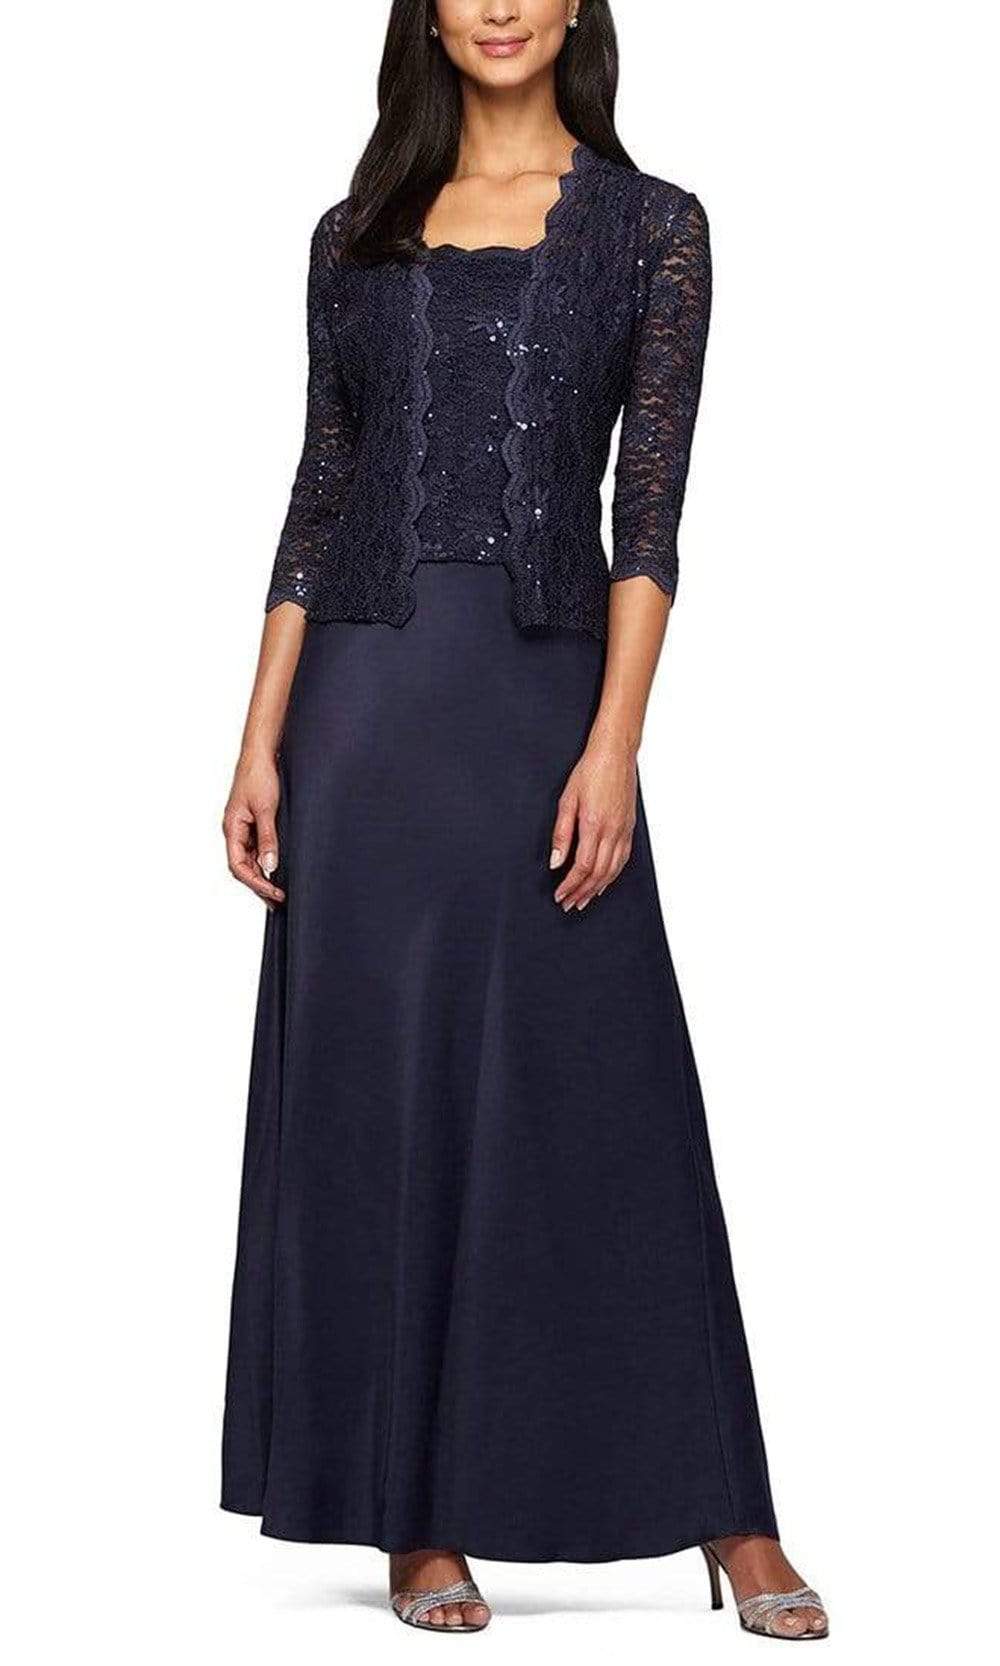 Alex Evenings - 1121198 Lace and Chiffon Dress with Lace Jacket
